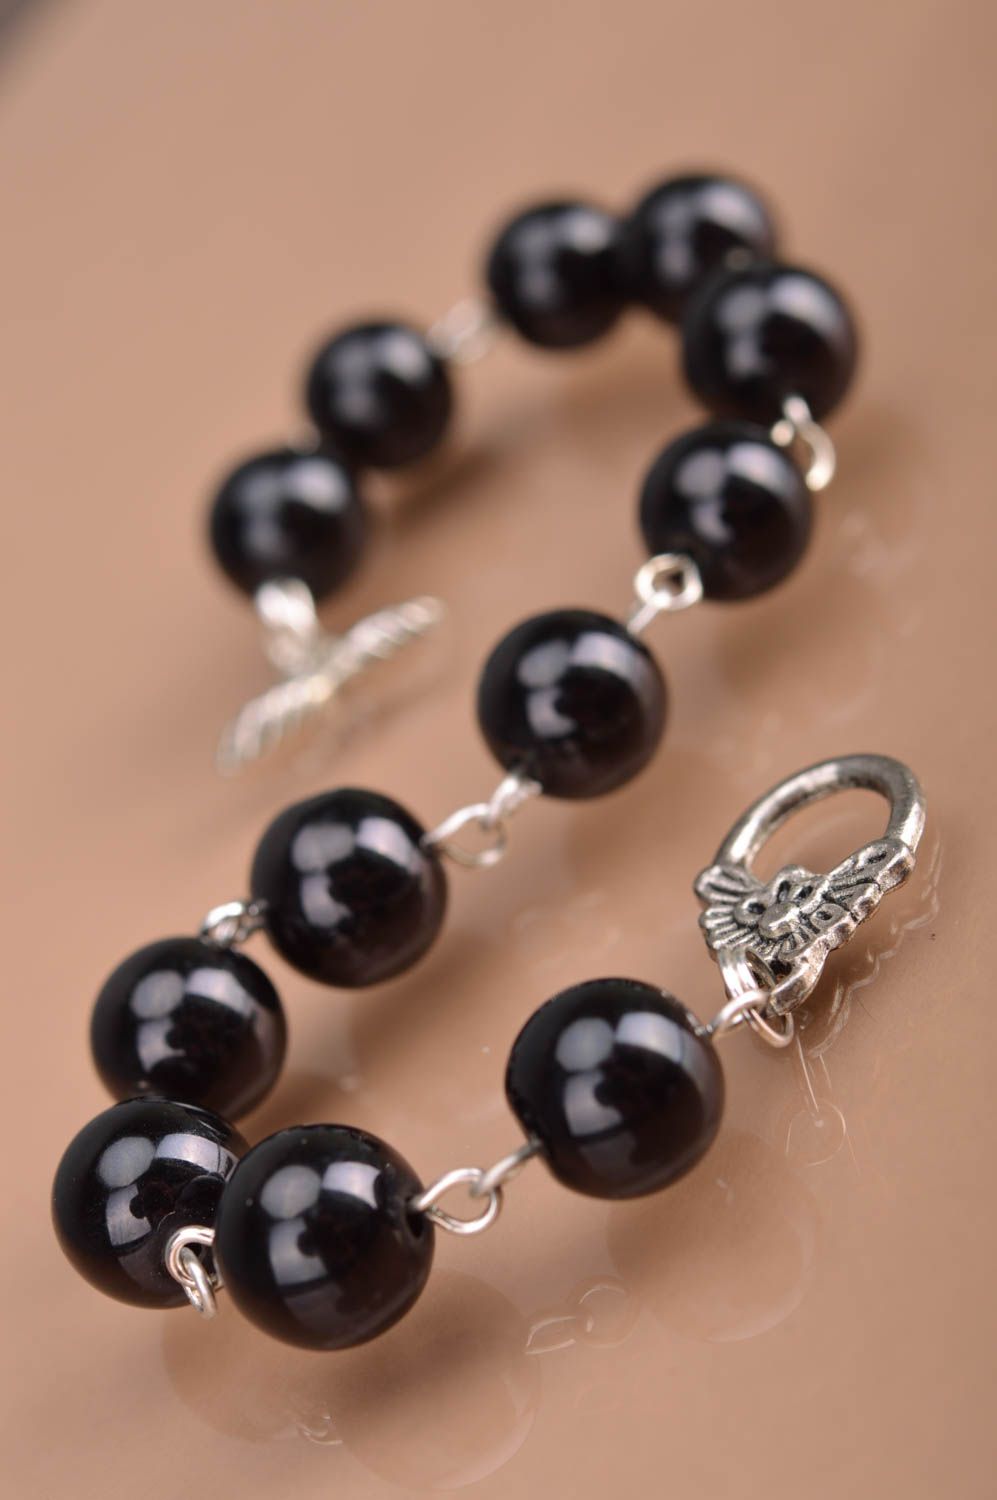 Designer women's wrist handmade bracelet with metal elements and black beads photo 5